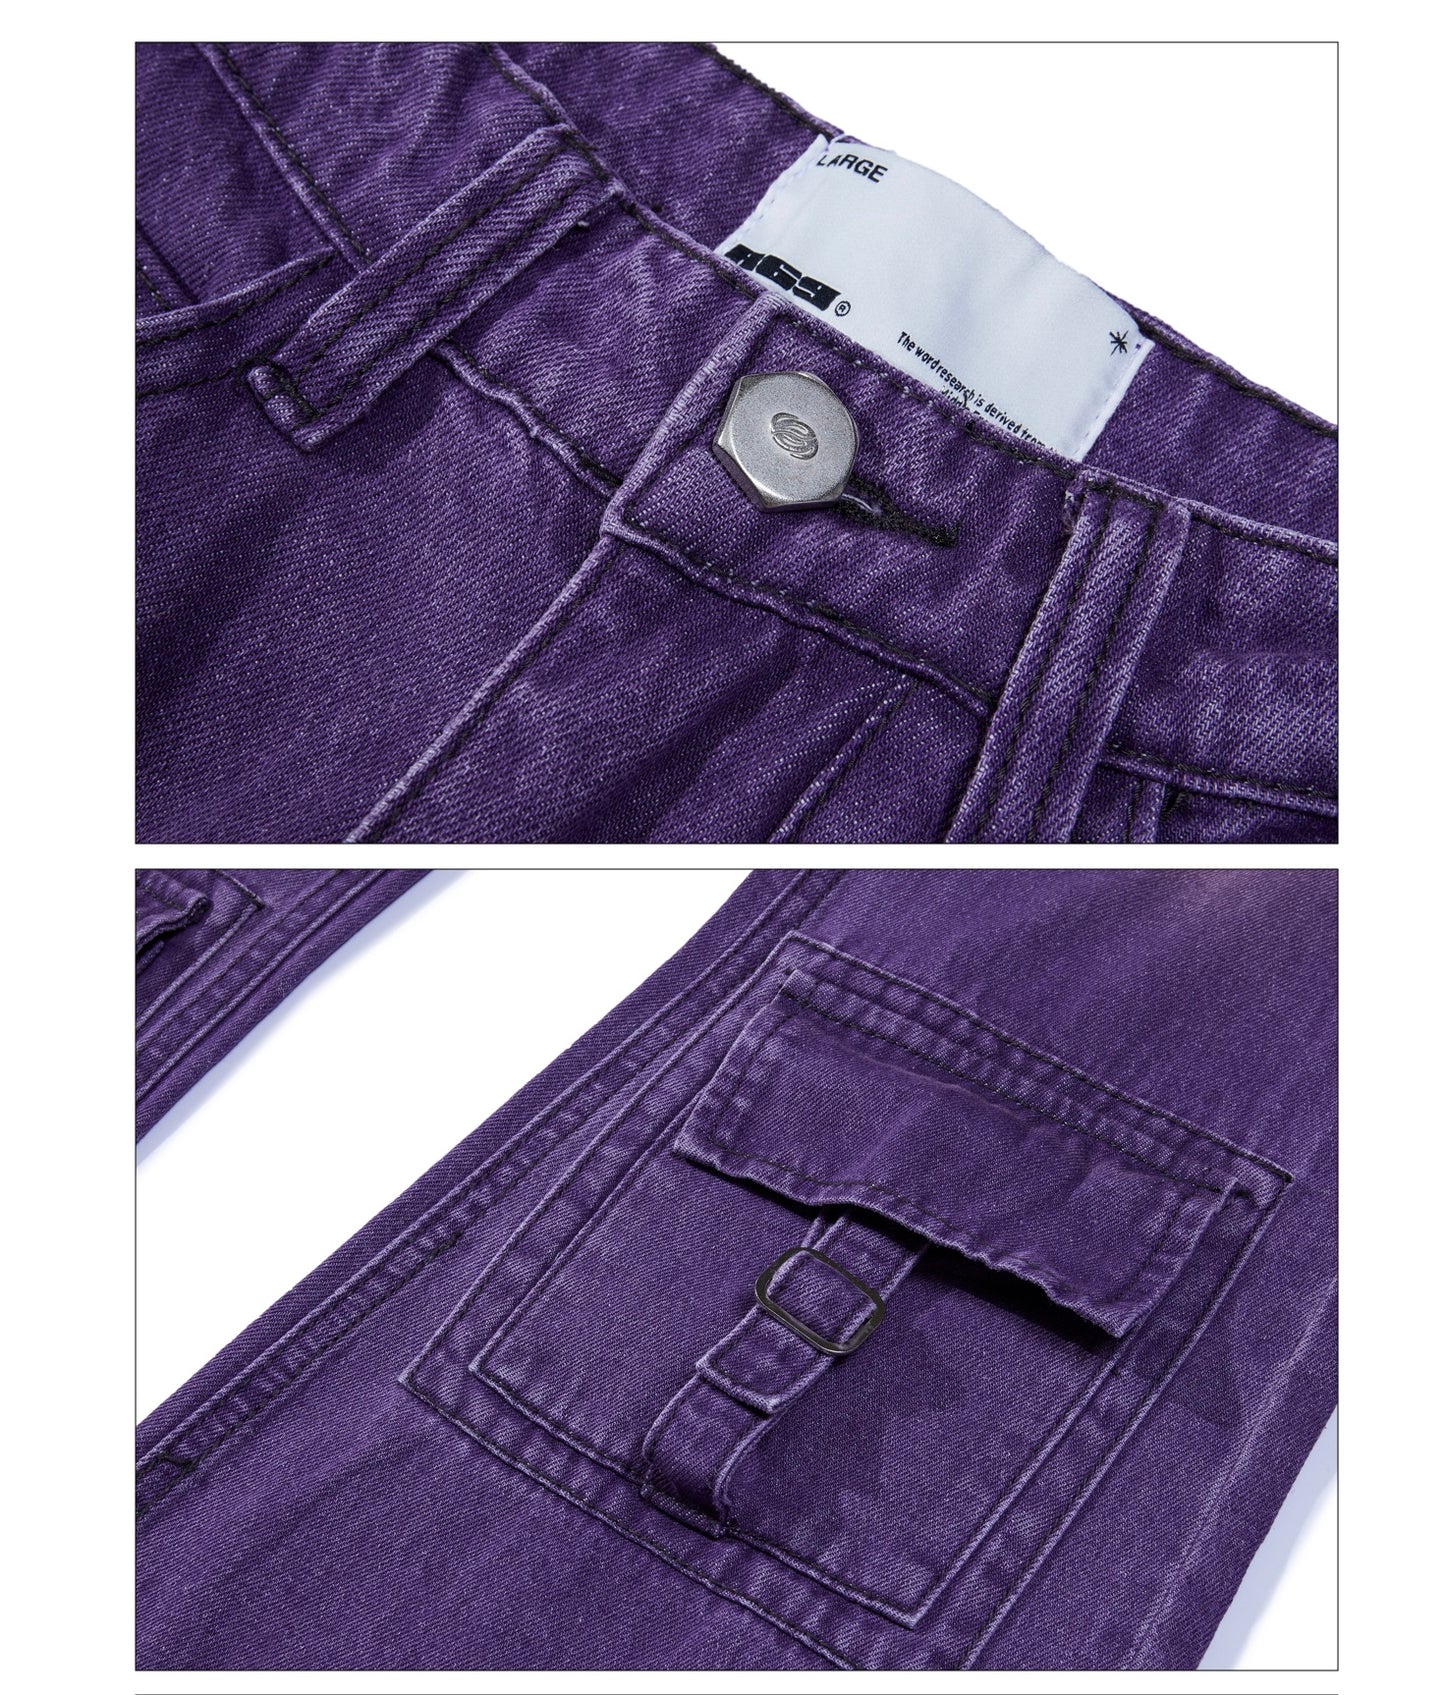 R69 Multi Pocket Pants Distressed Jeans